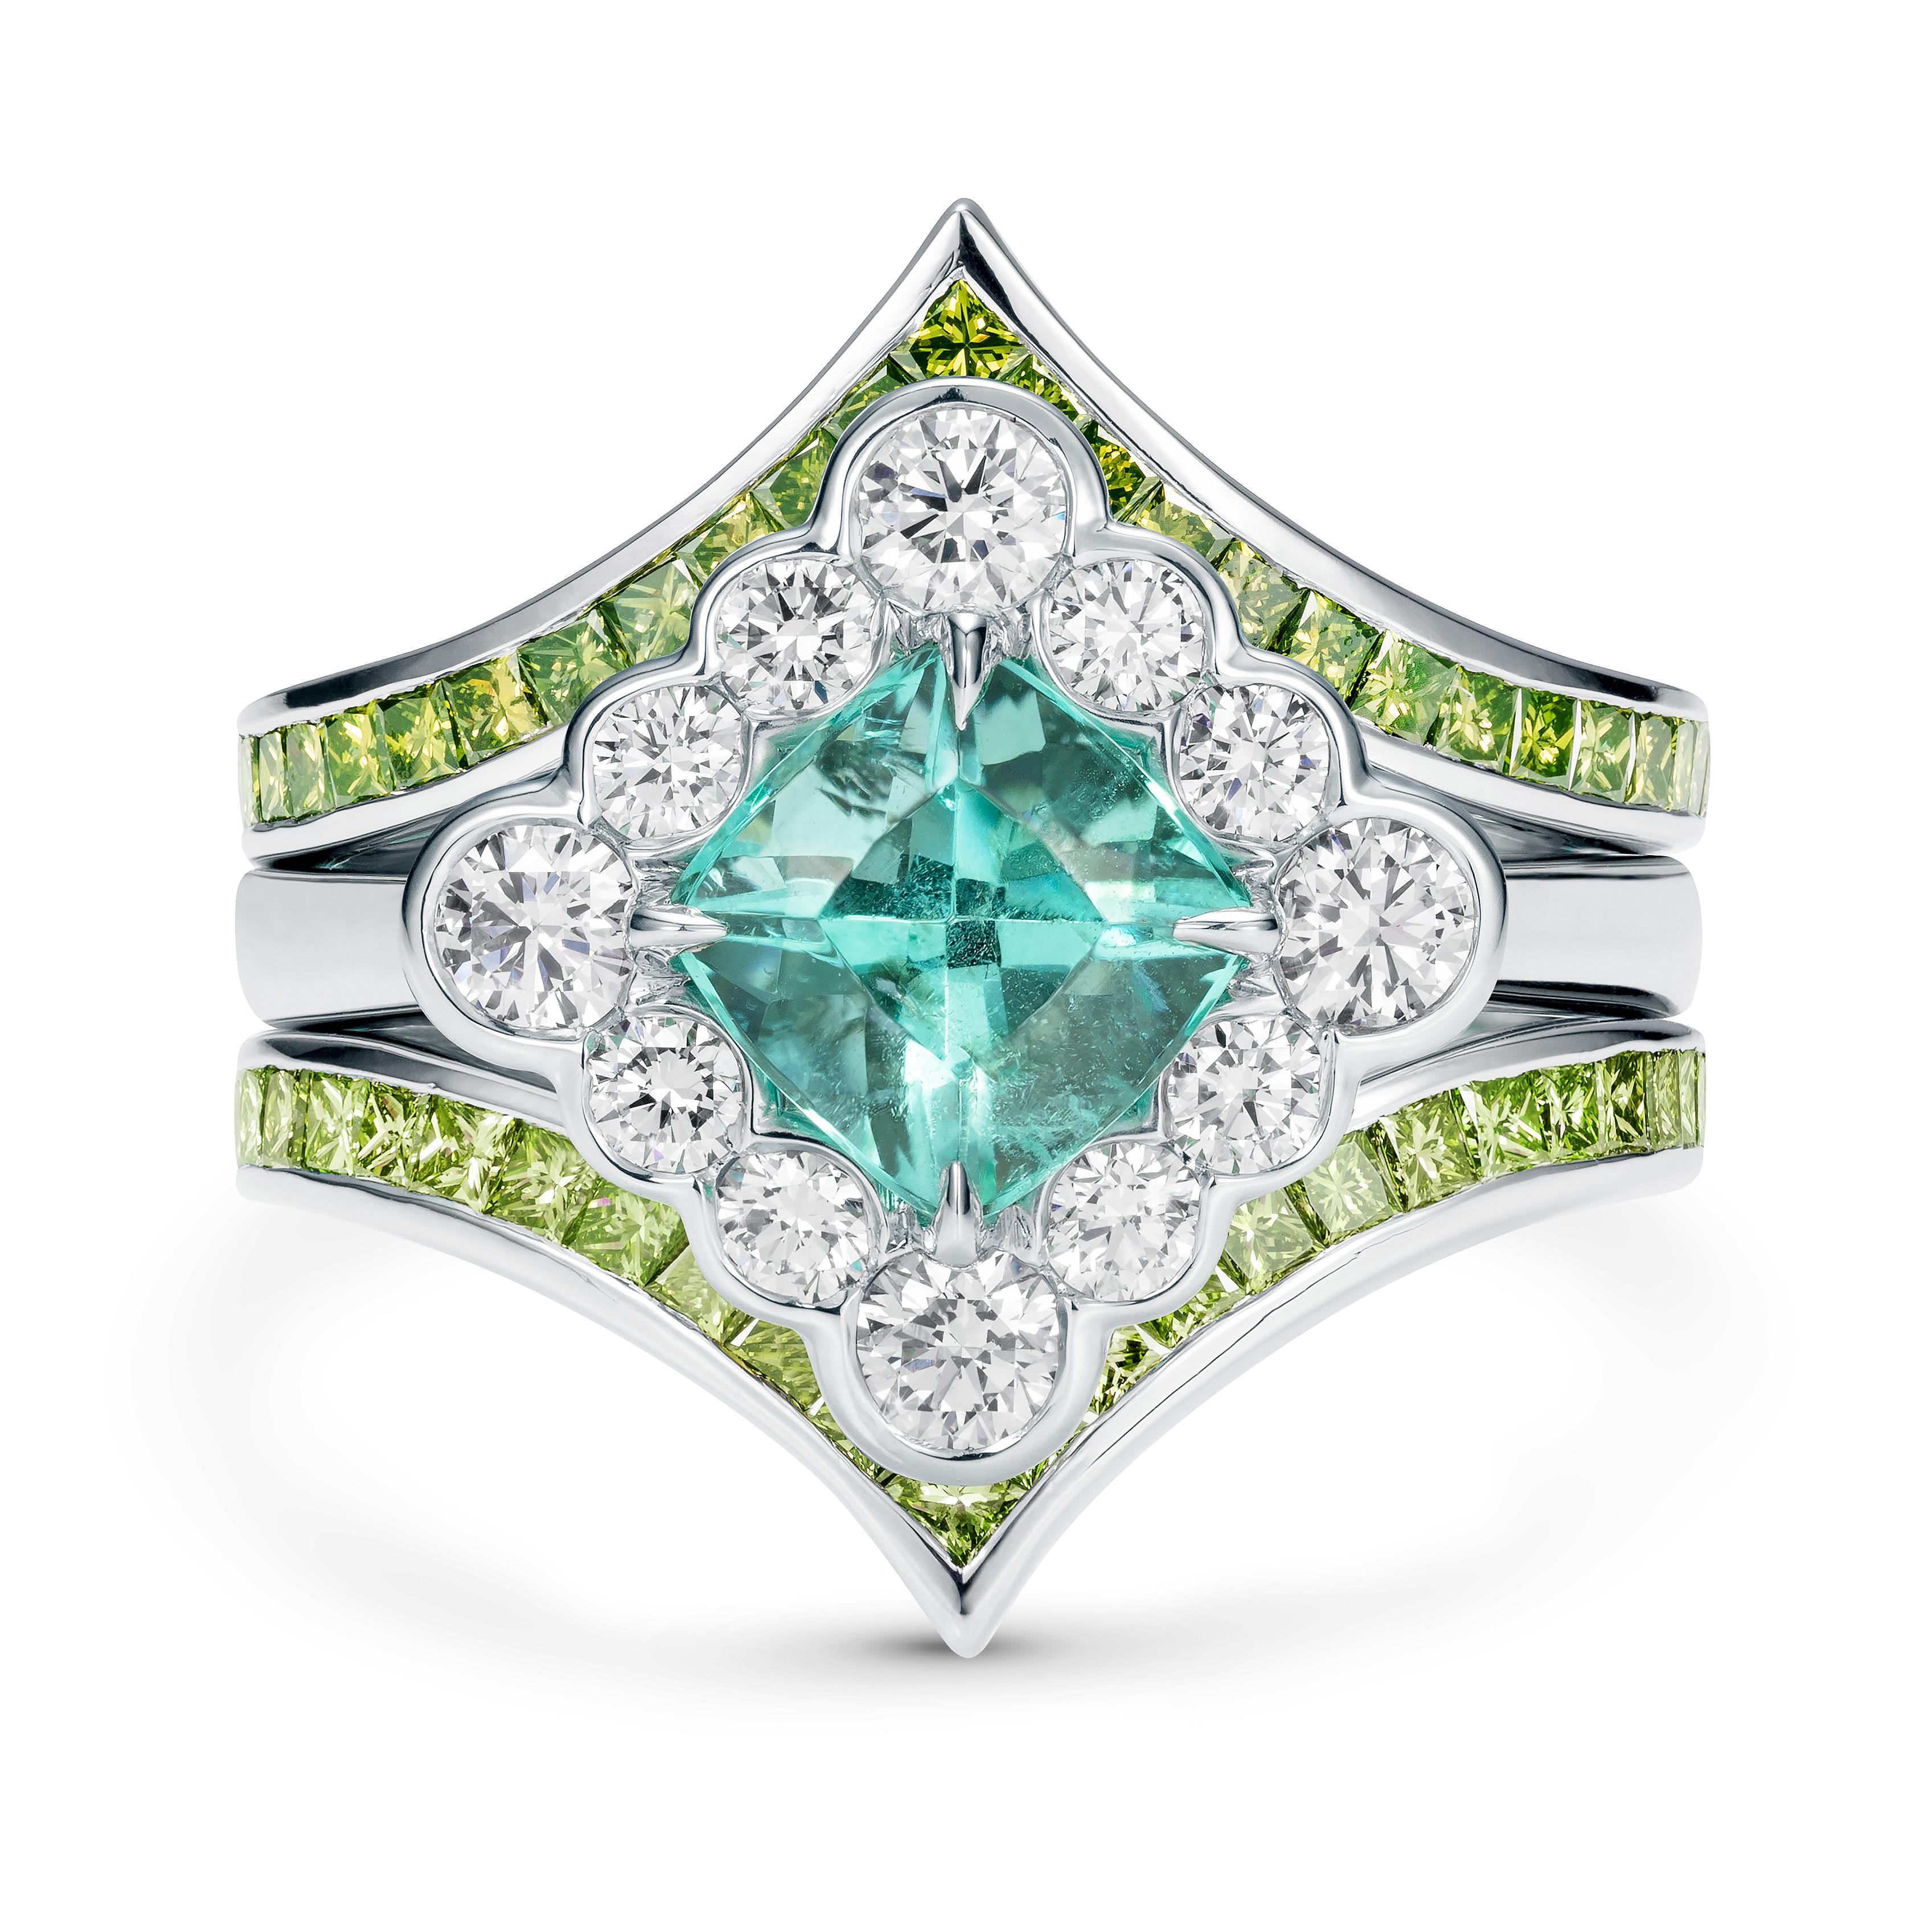 Marcel Salloum 1.05 Carat Paraiba Tourmaline Diamond Engagement Ring in Platinum For Sale 2